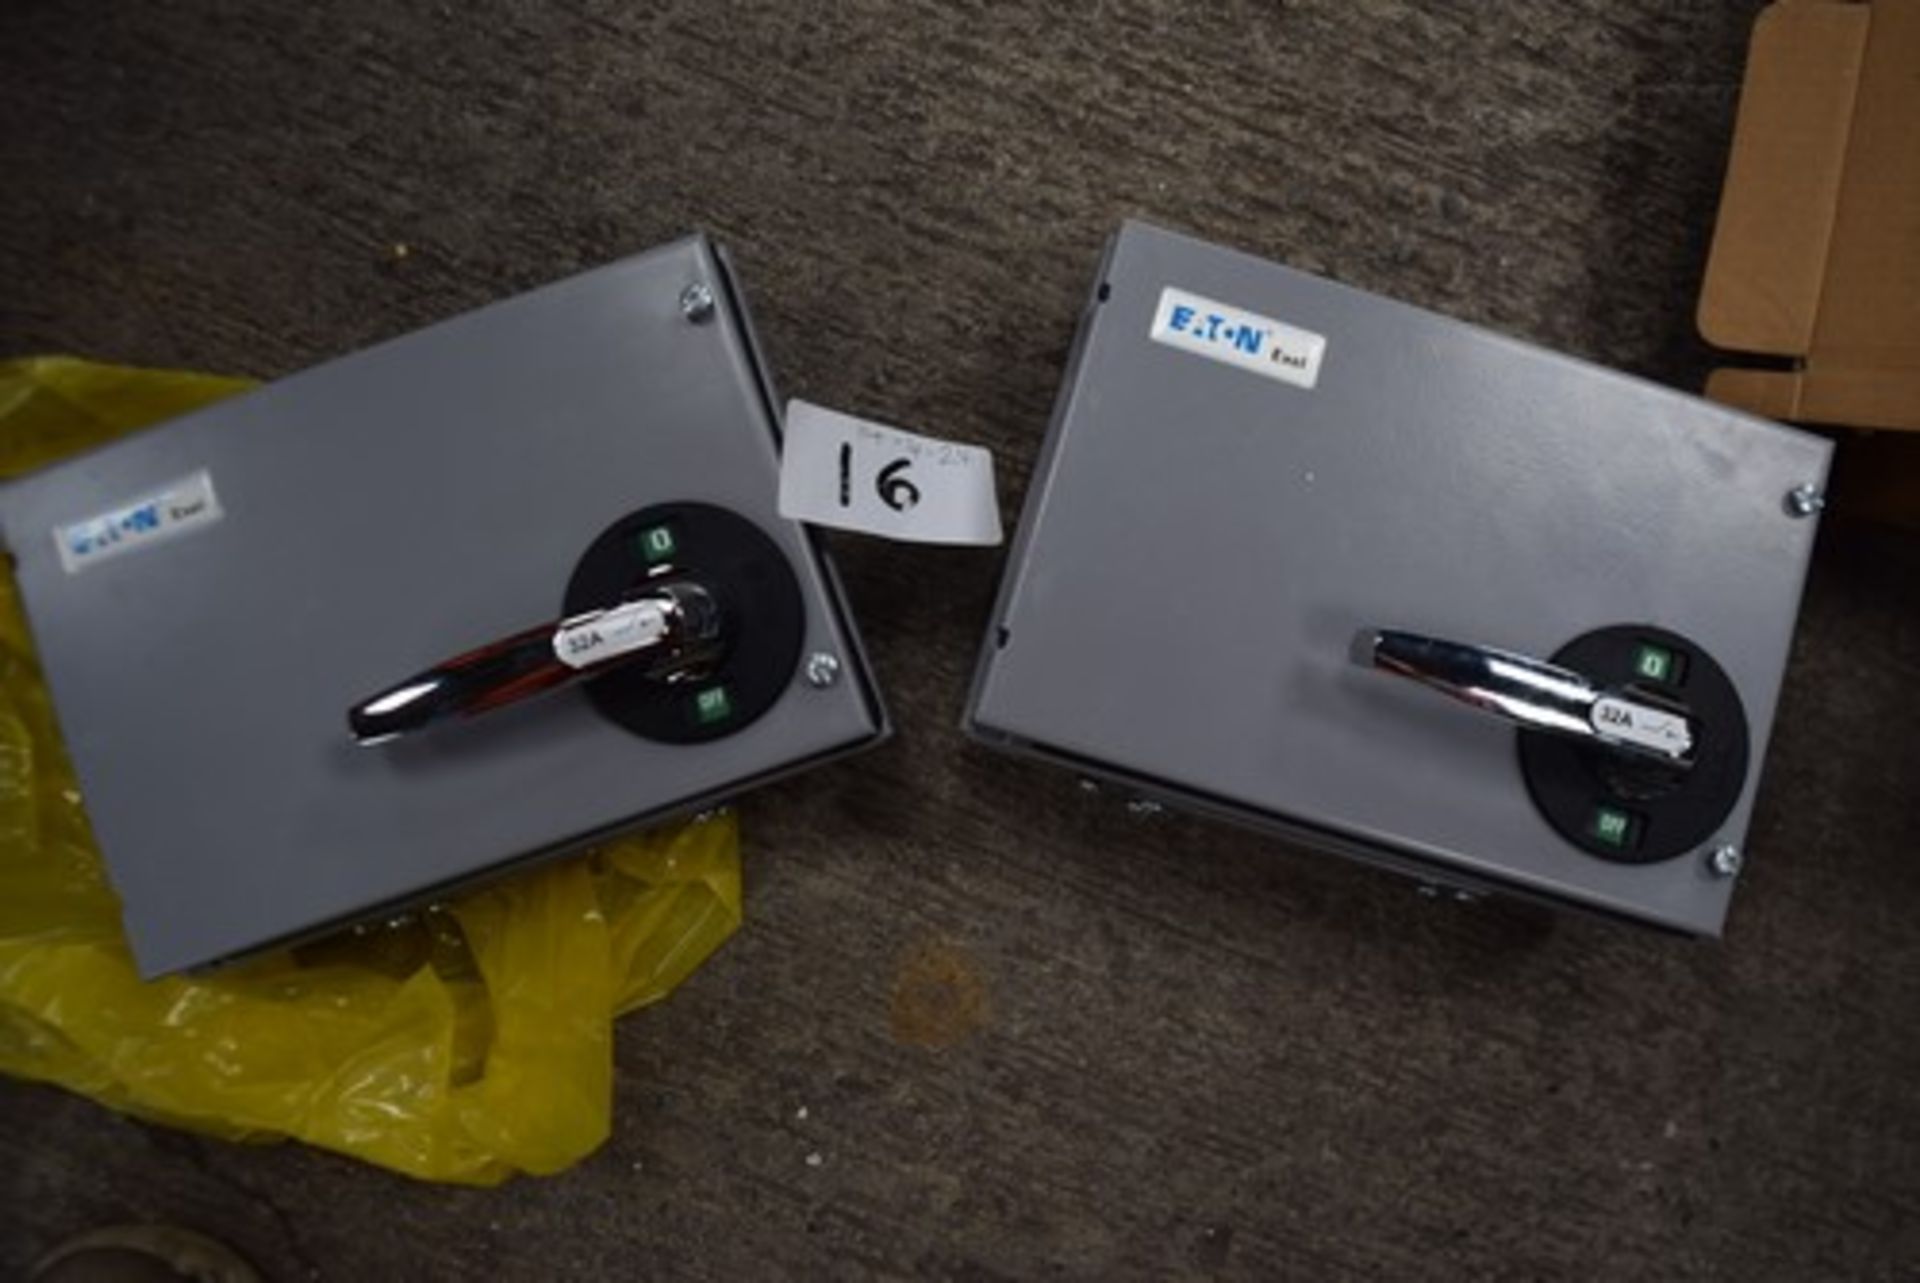 2 x Eaton Exel switch disconnectors, item no: 30AXTN2, Note: some ceramic insulators are broken - - Image 2 of 12